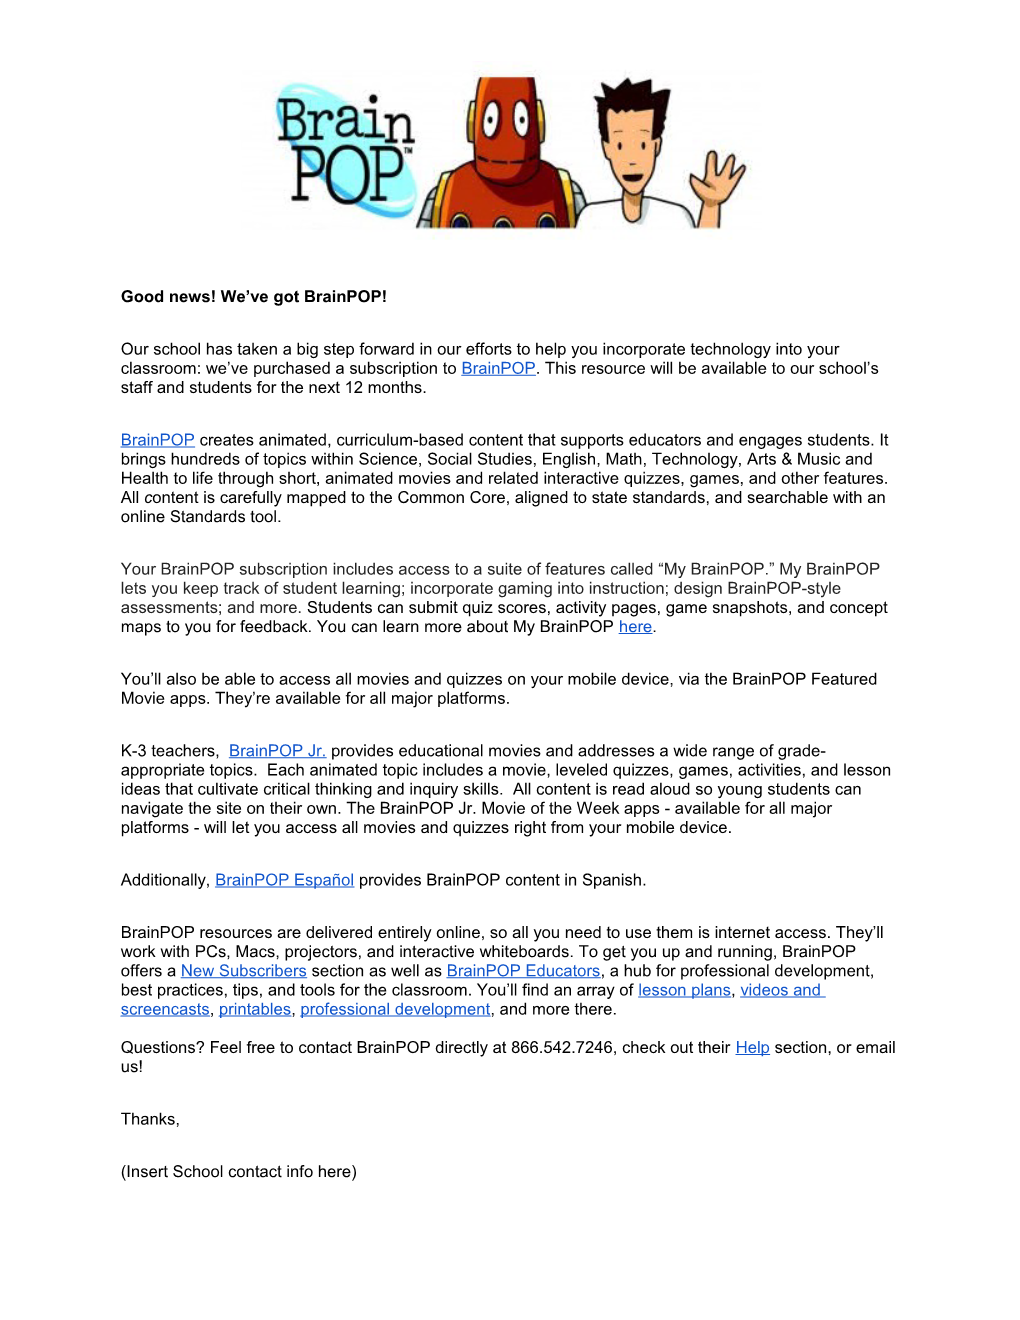 Brainpop Letter to Staff (Support Resource)